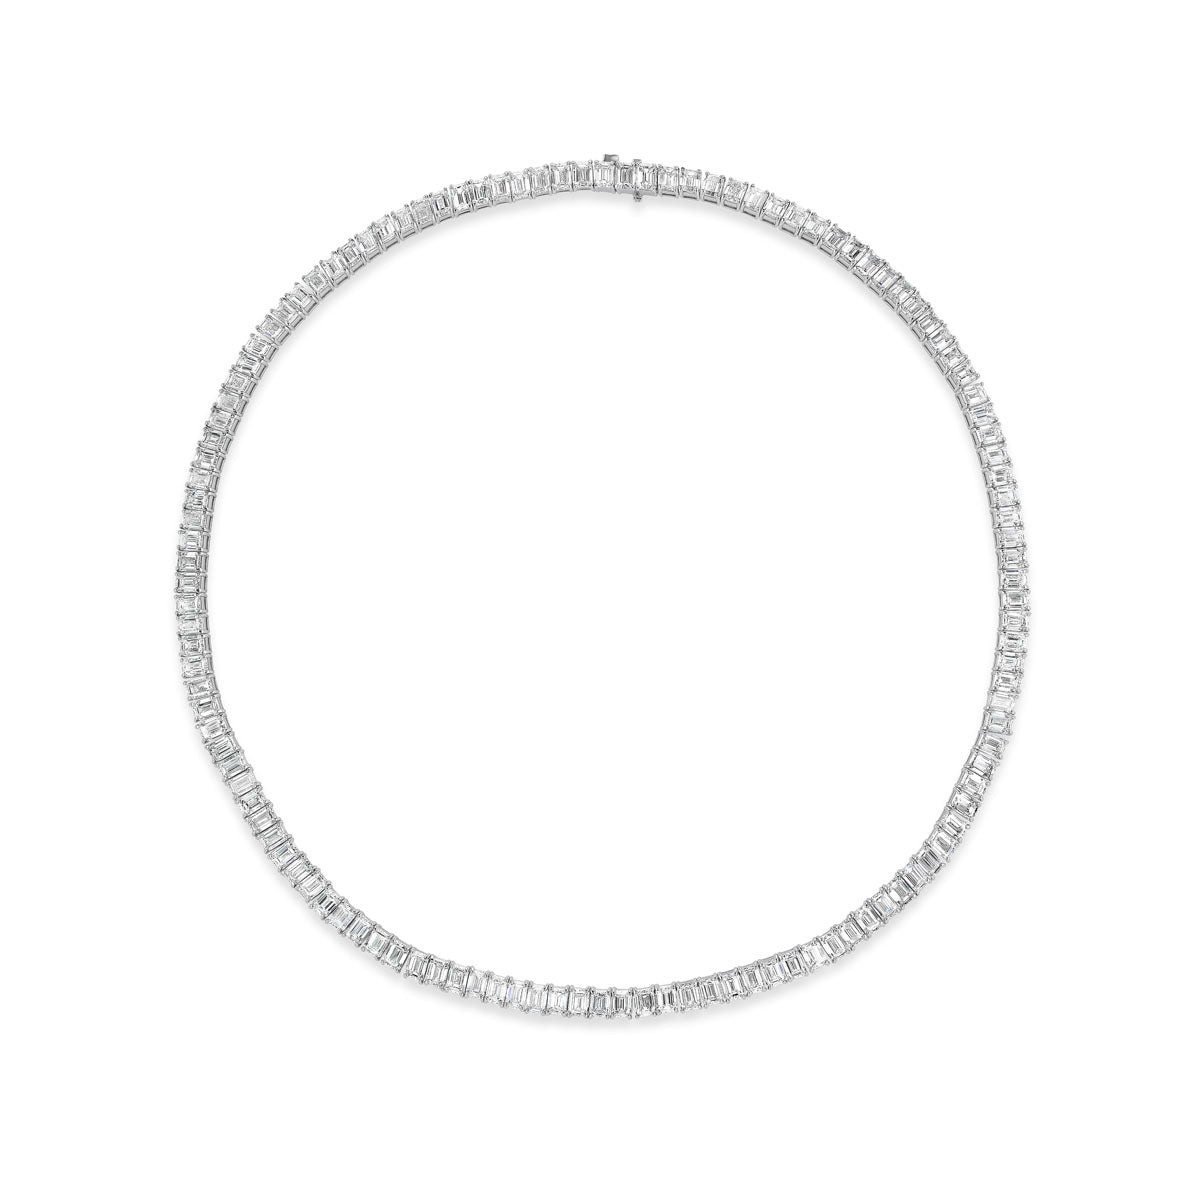 Emerald Cut Diamond Tennis Necklace in White Gold